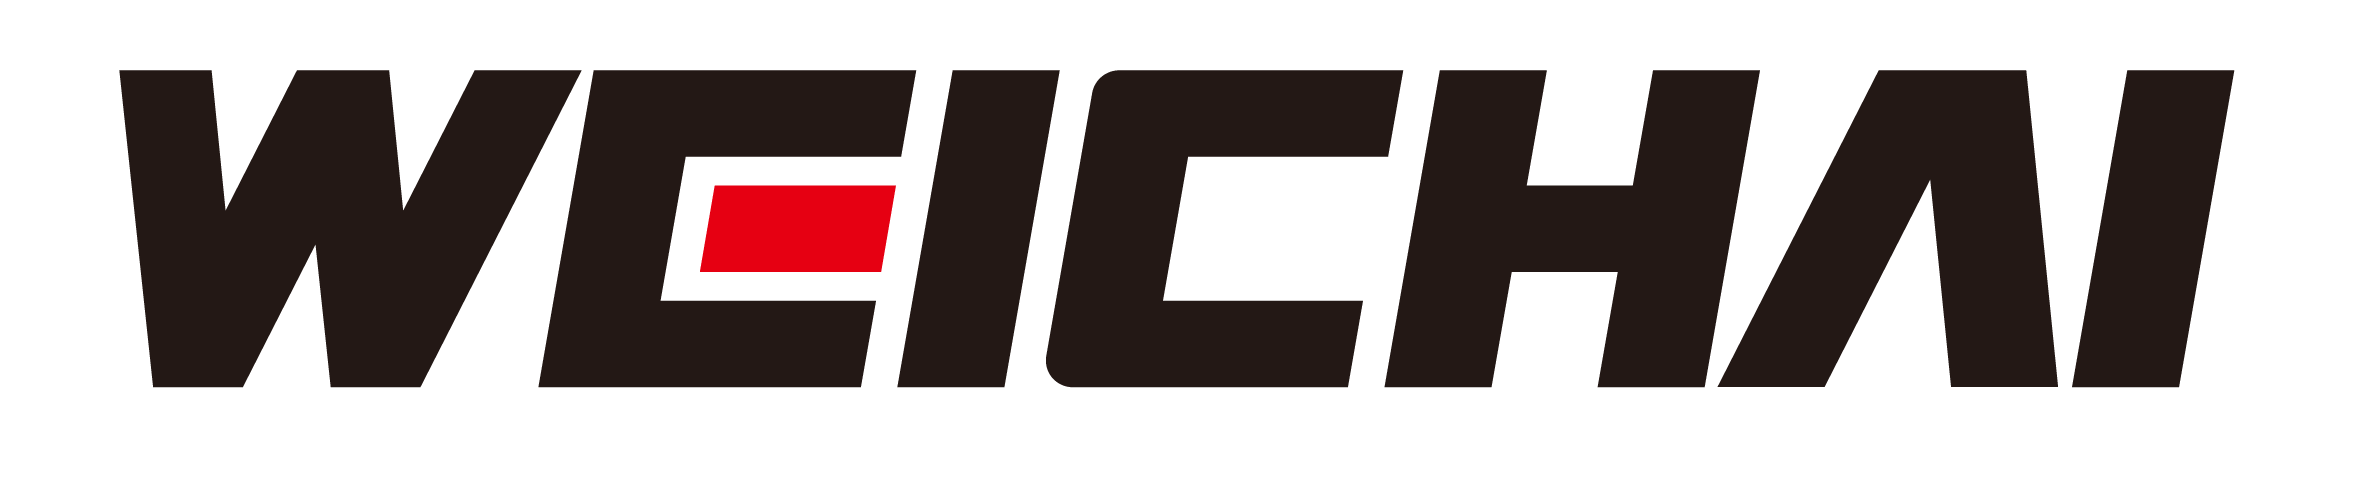 Weichai Power Co. Ltd. Logo